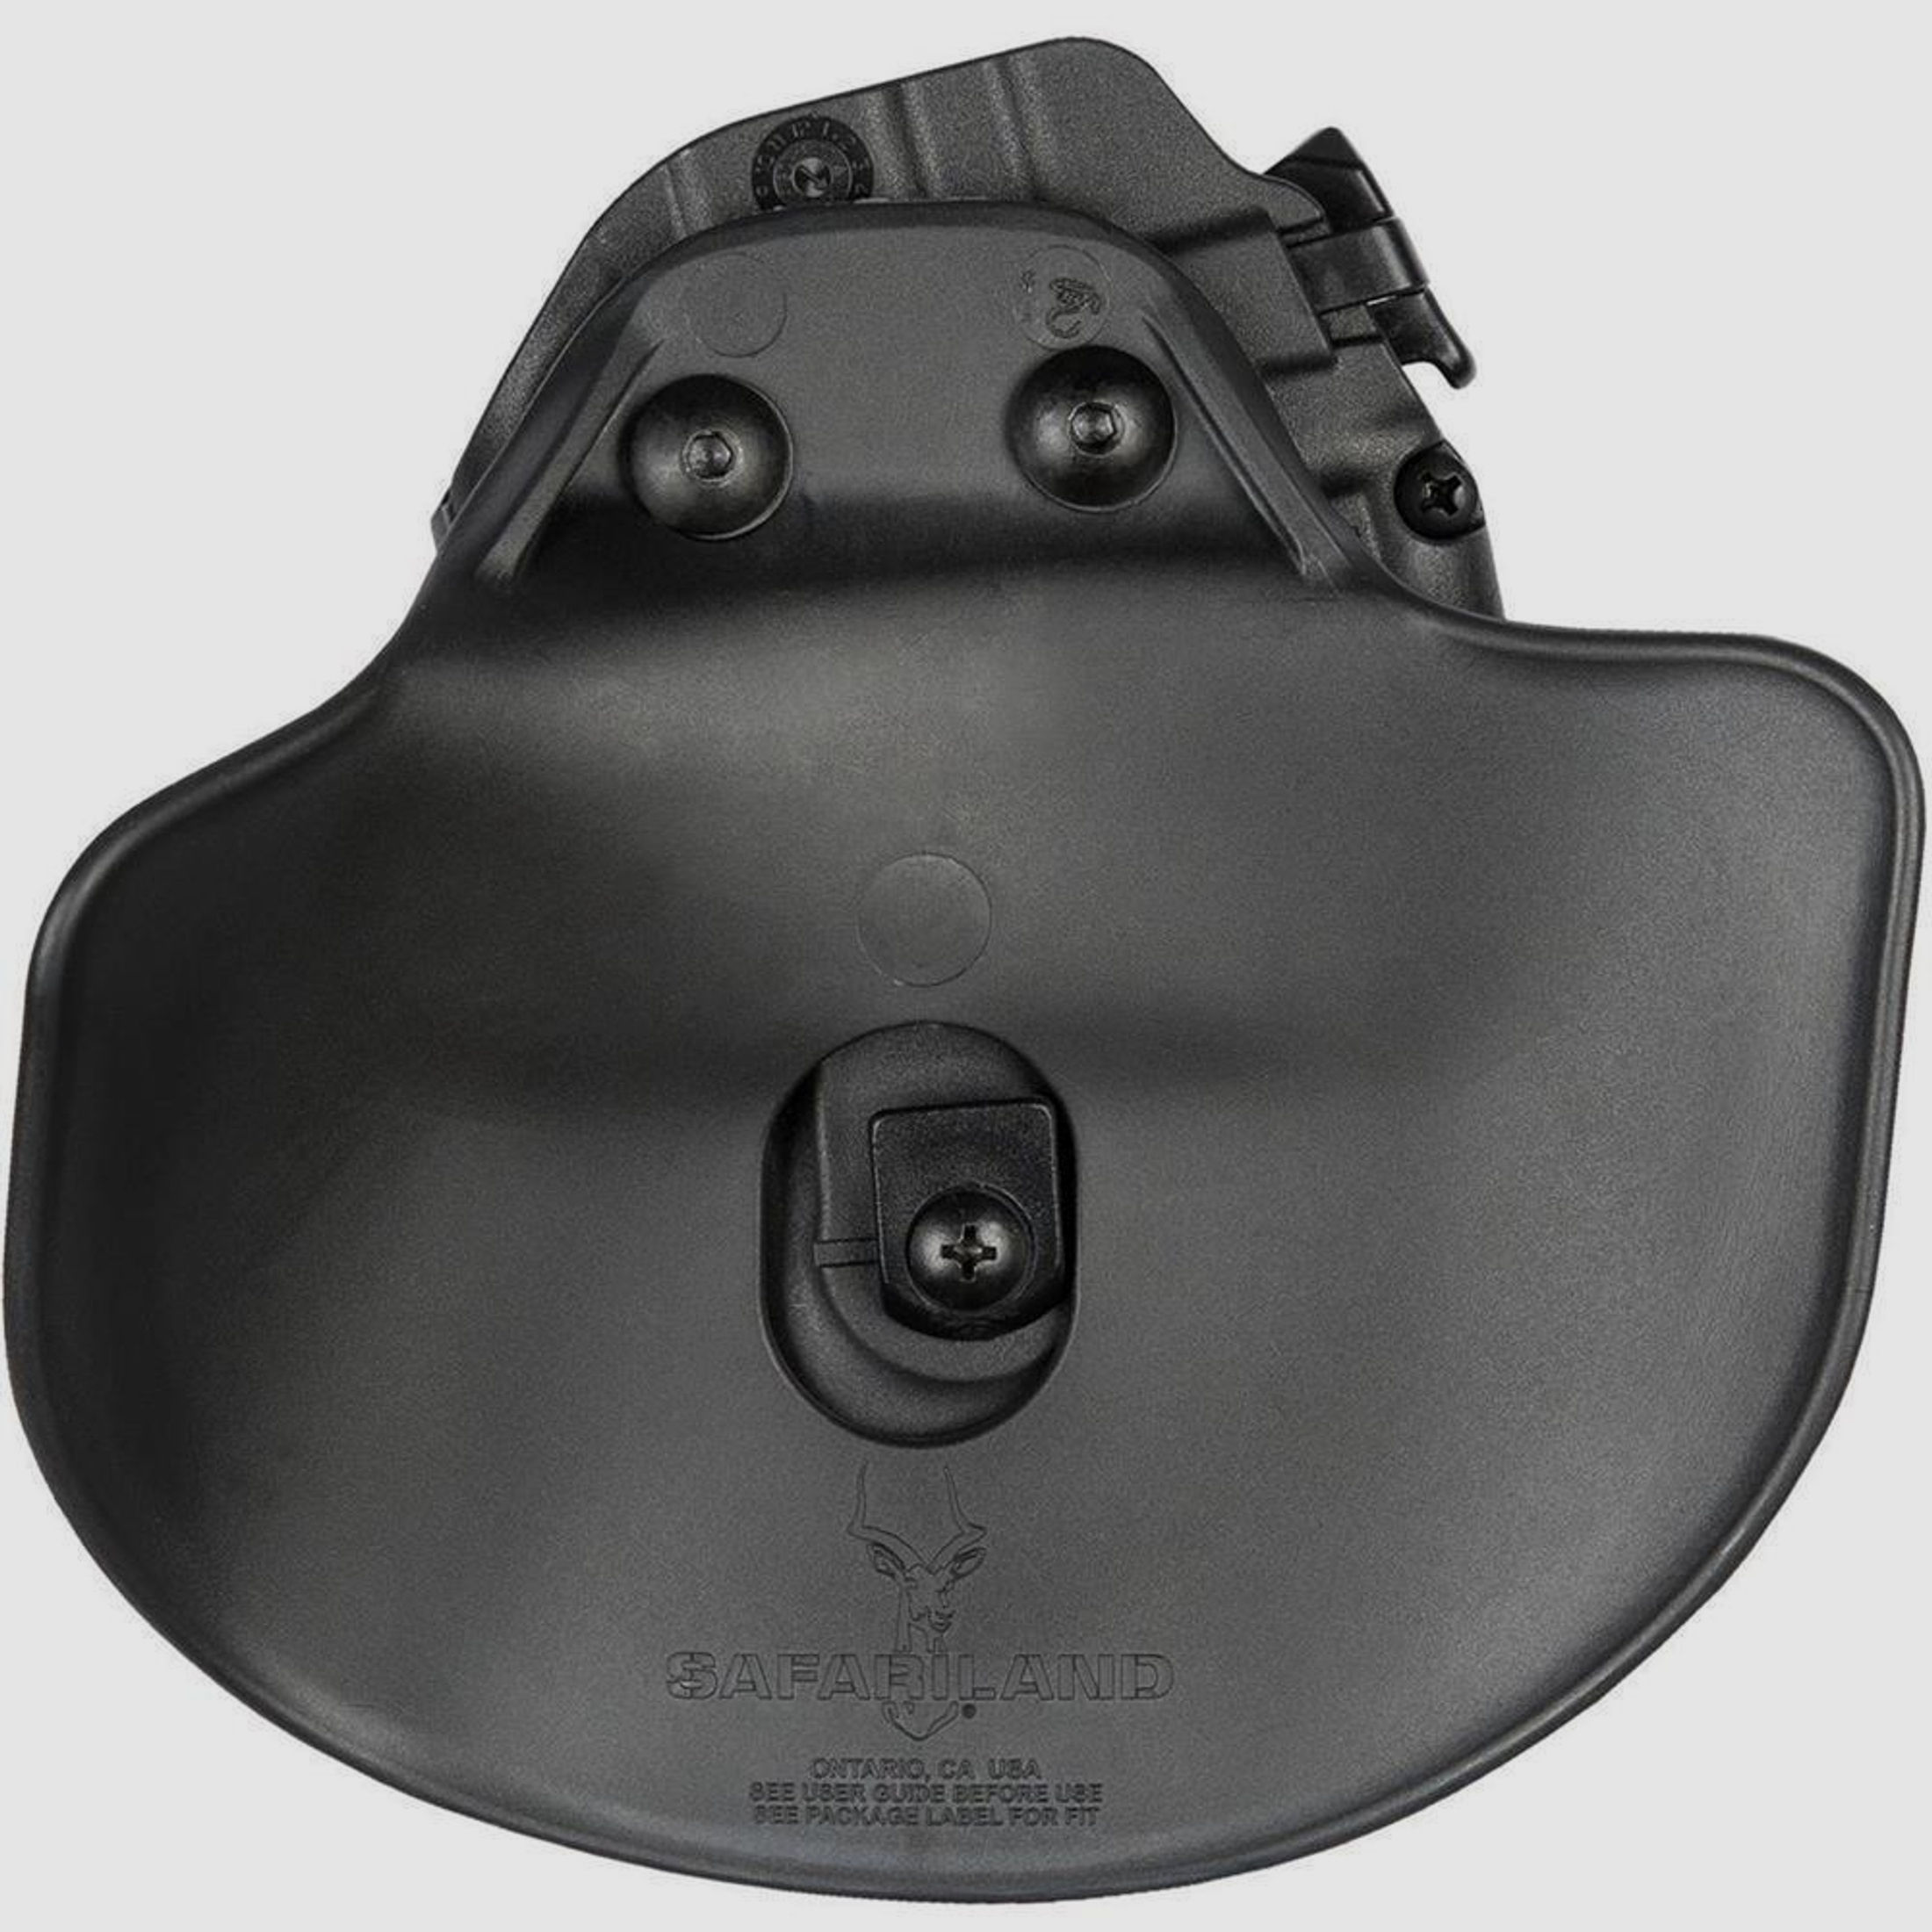 SAFARILAND 578 GLS "PRO-FIT" 7TS Paddleholster 183* Glock 26/27/30/30S/33/39,H&K P2000SK/P30SK,S&amp;W M&amp;P Shield/Compact,Walther P99C DAO/QA/AS/PPS 9mm,.40-Beige-Rechts